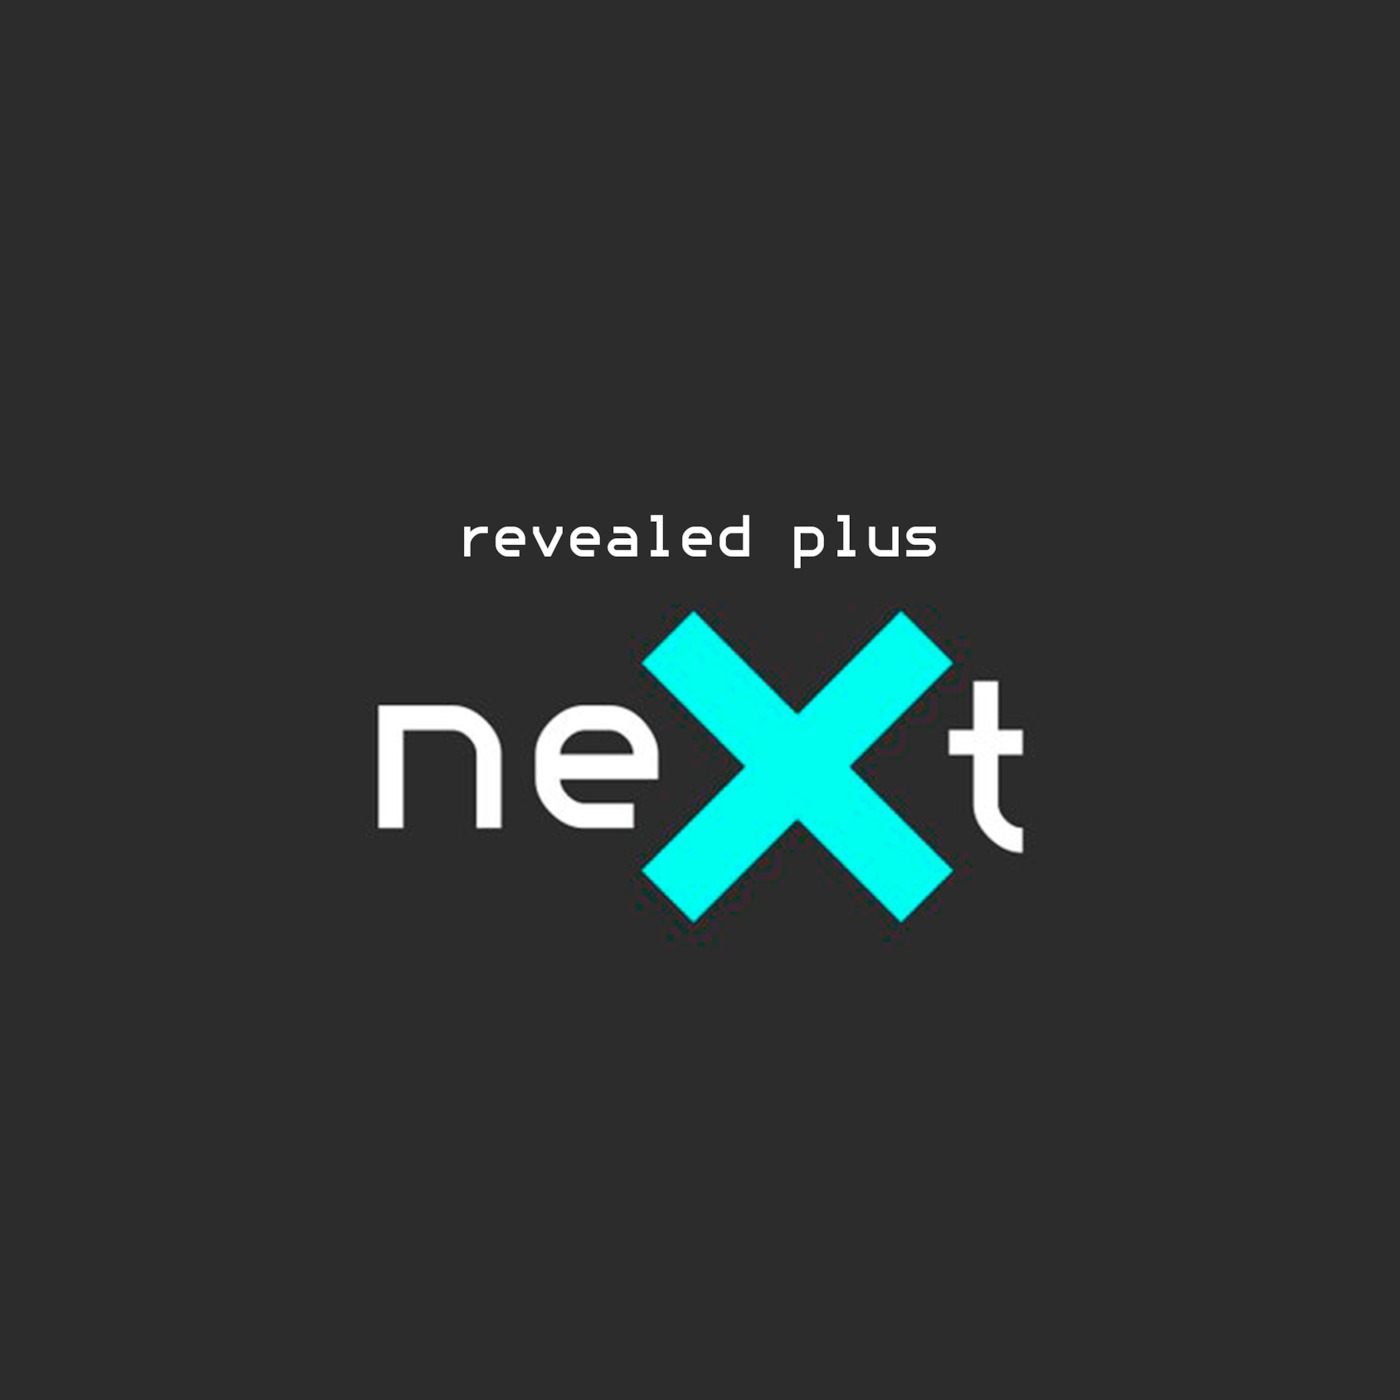 neXt 001 - Revealed Plus